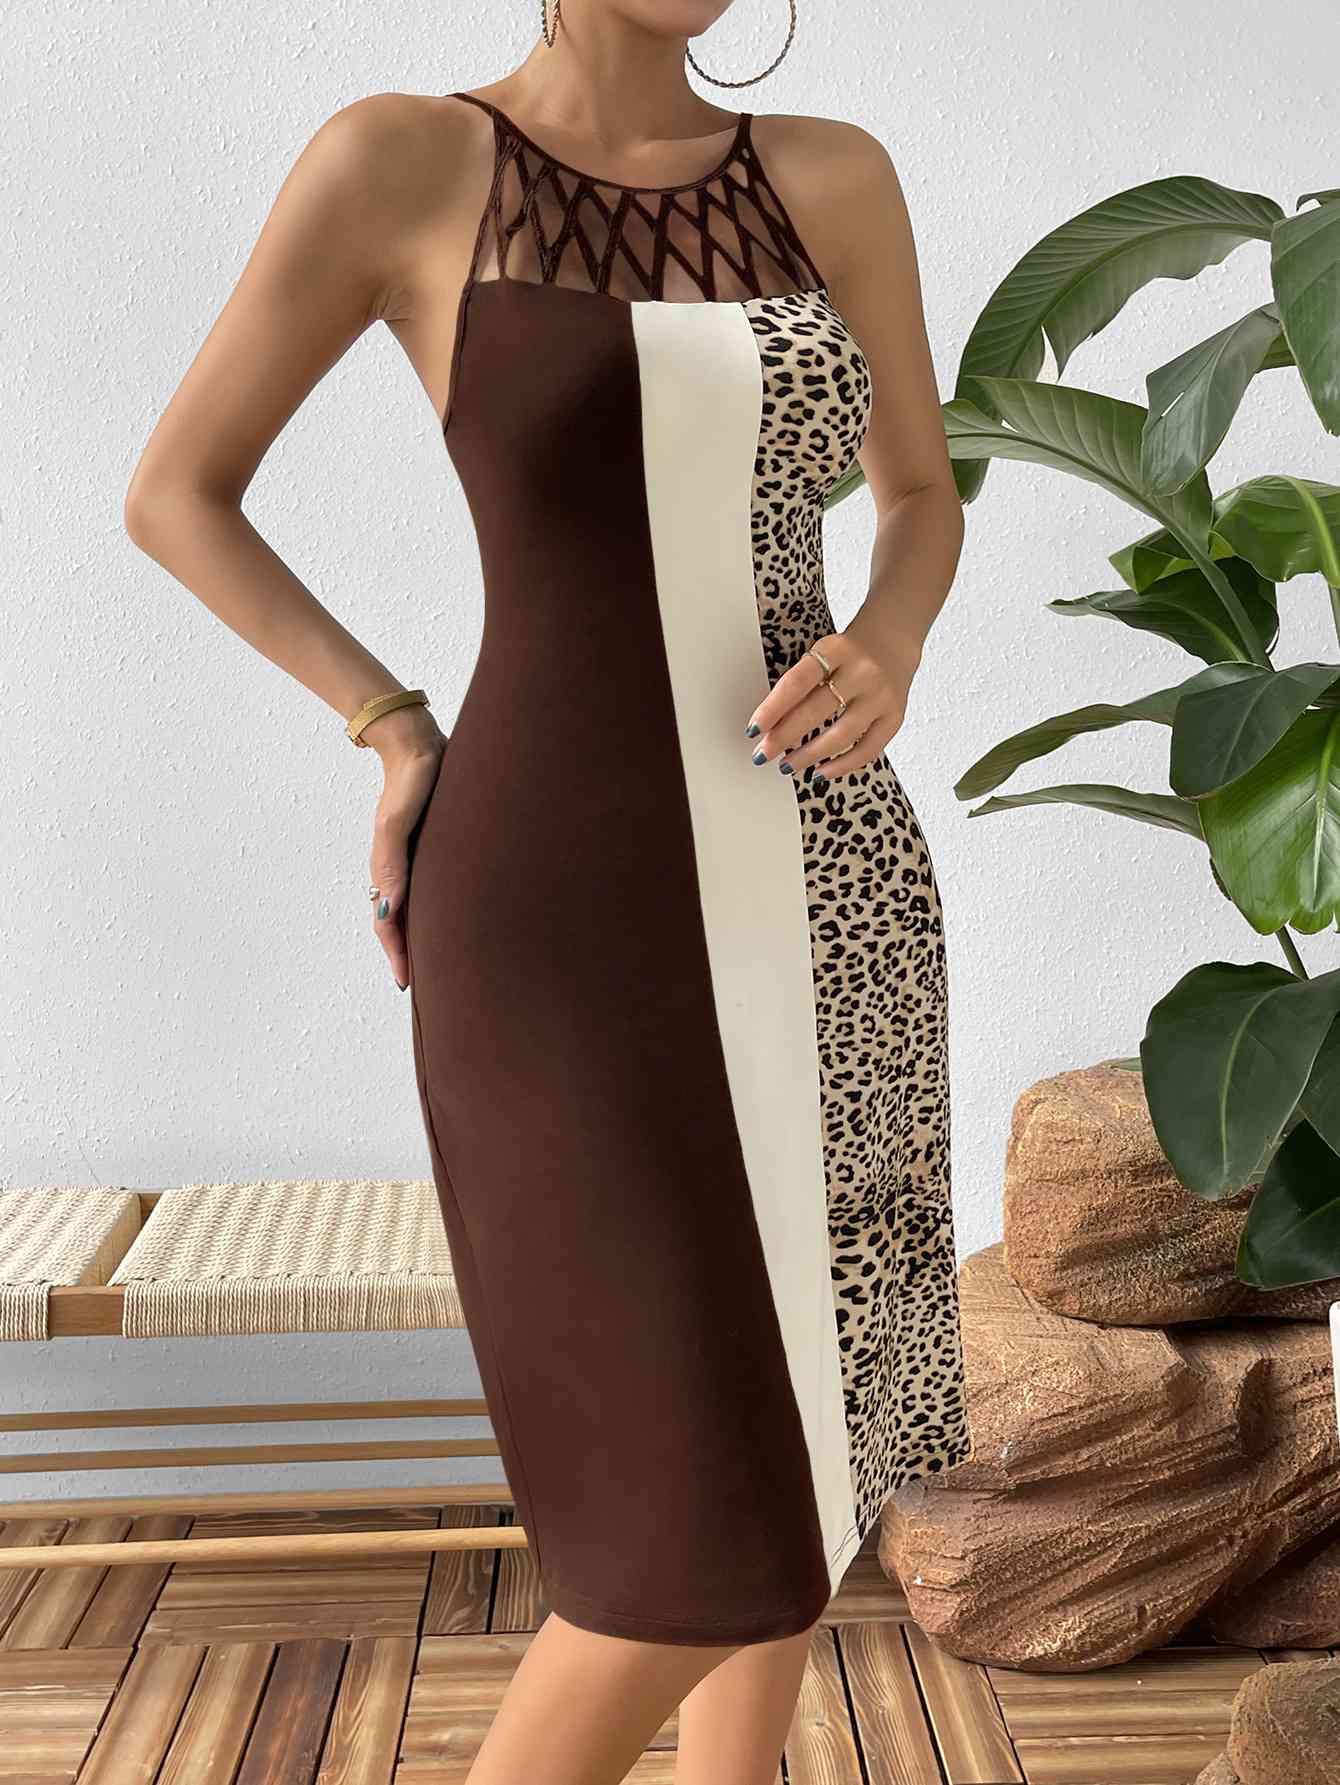 Dress: Leopard Color Block Cutout Sleeveless Knee-Length Dress